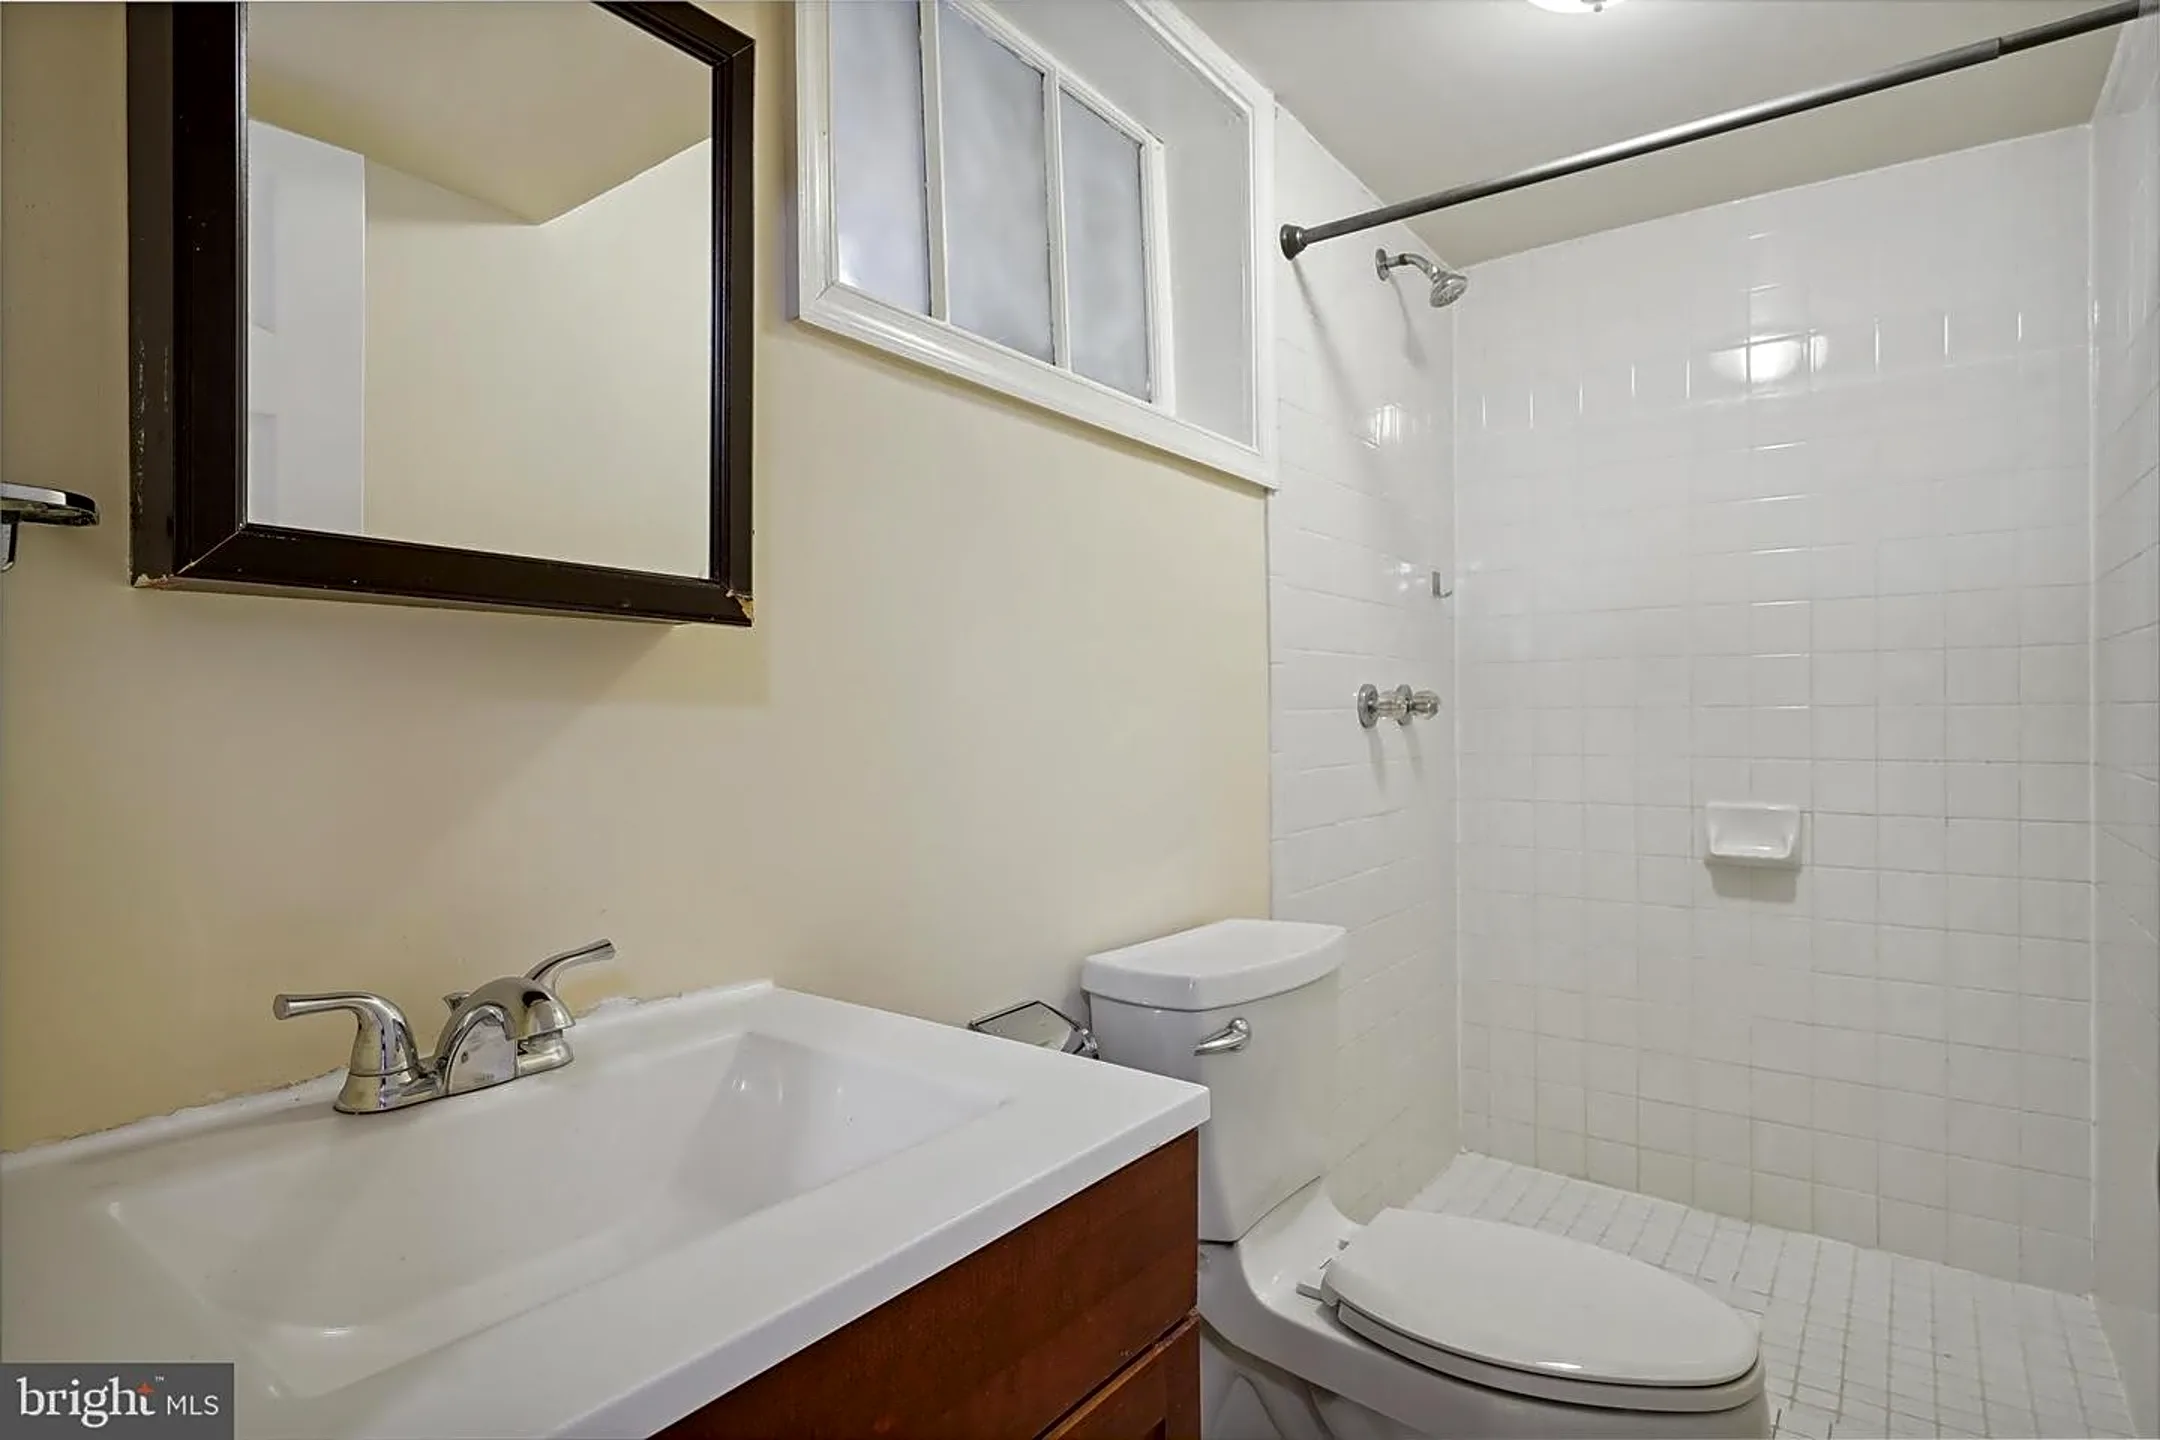 Bathroom - 4226 Fessenden St NW - Washington, DC